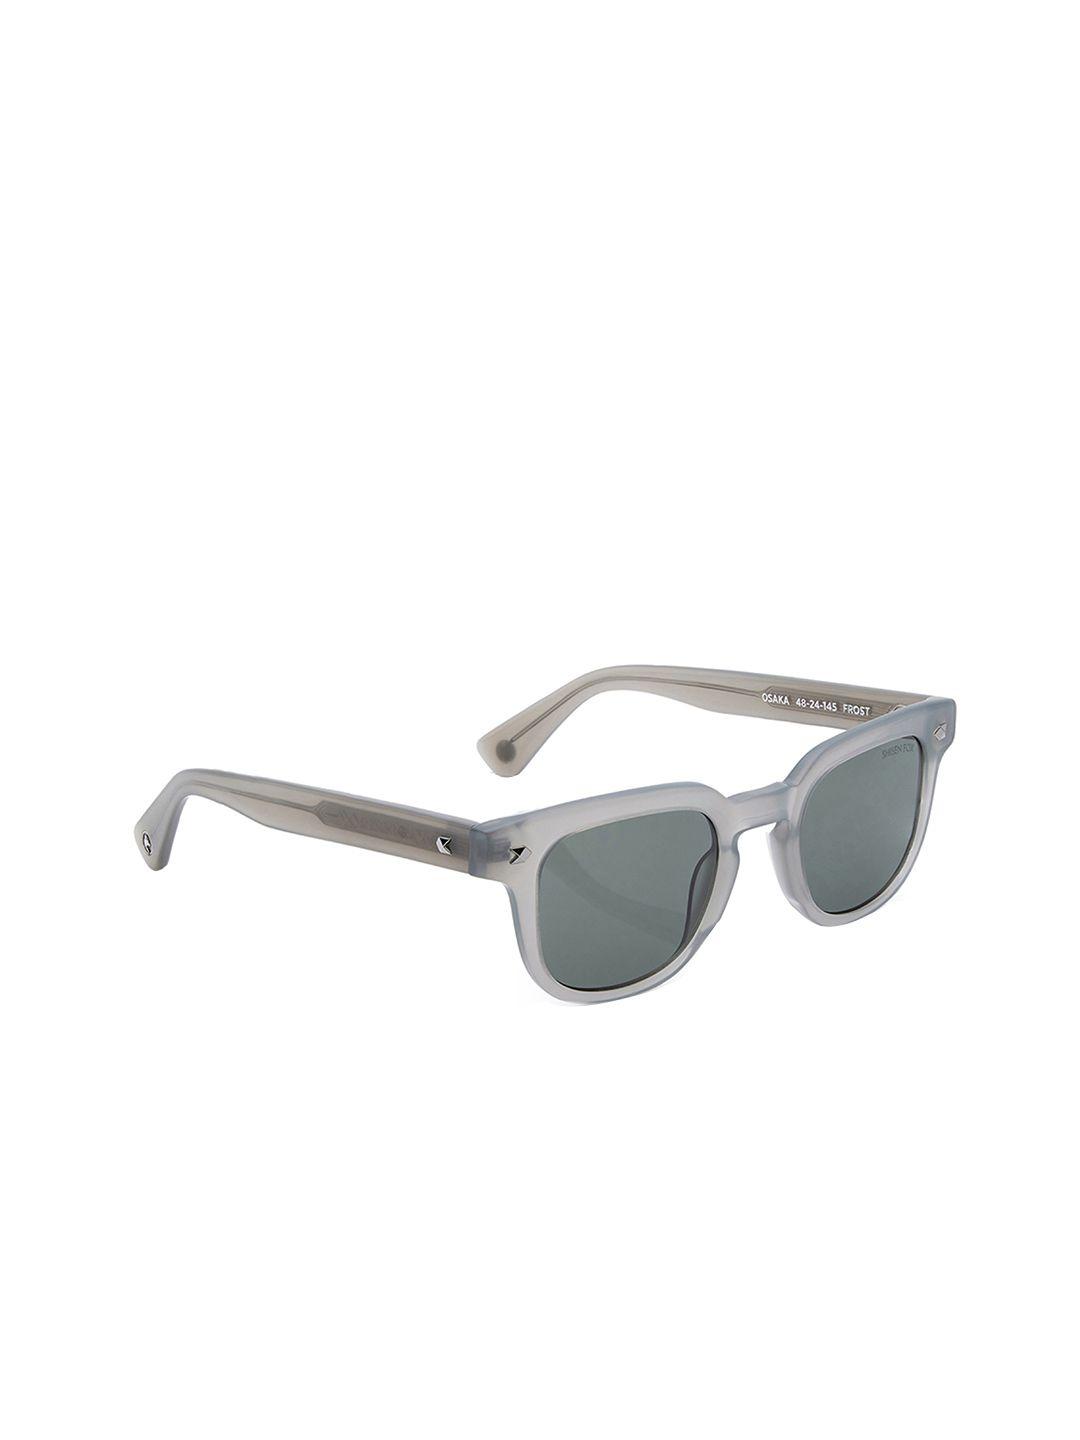 shisen fox unisex square sunglasses with uv protected lens sg060